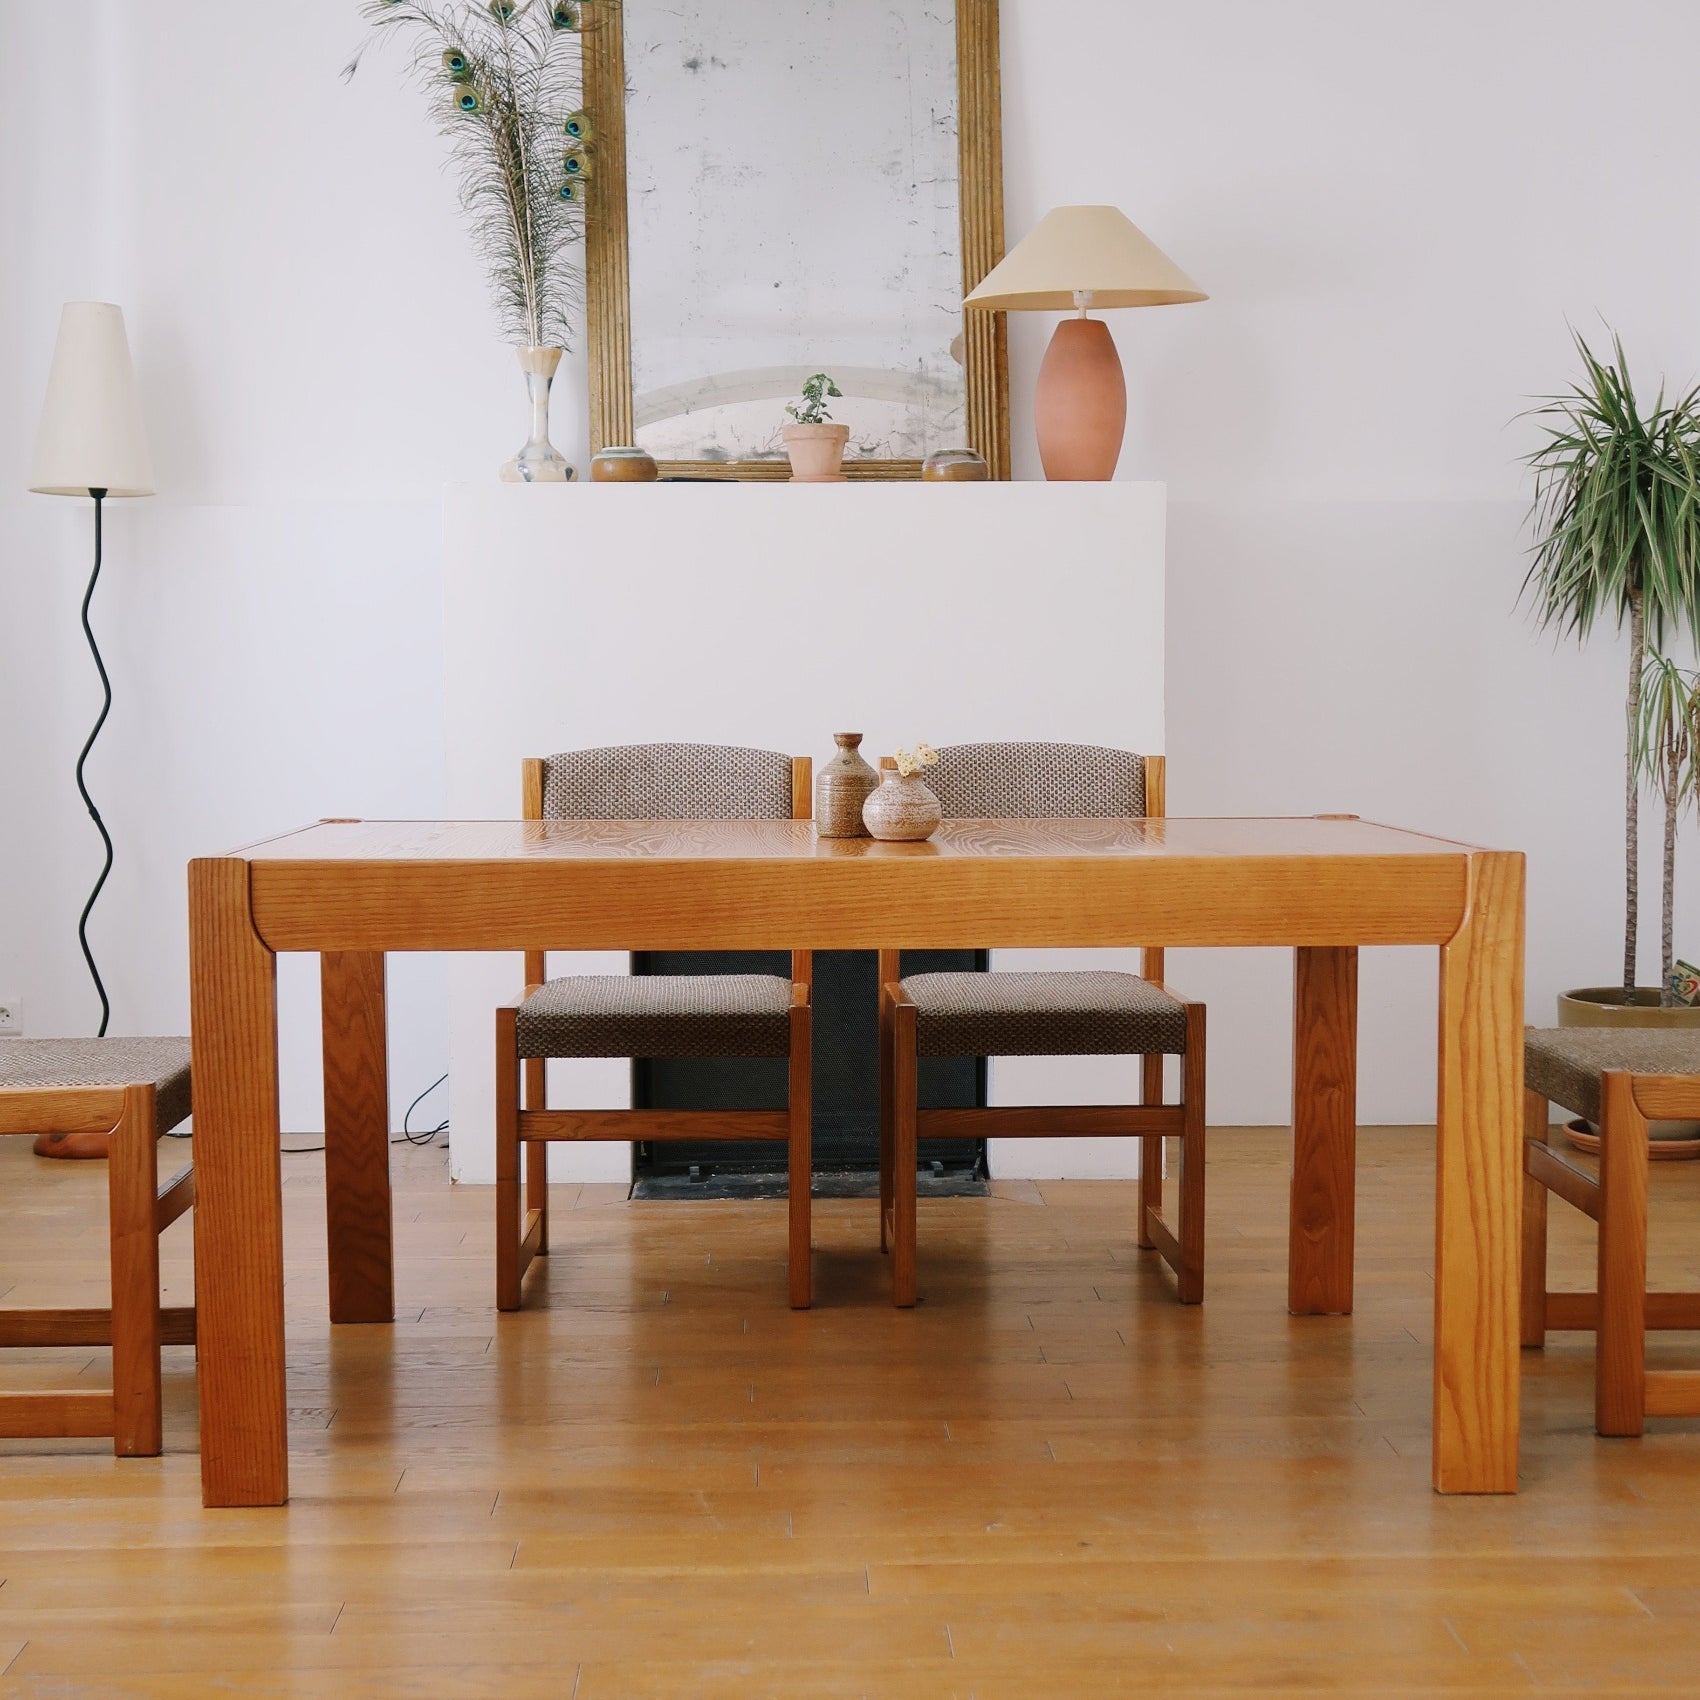 table orme massif extensible rallonge maison regain charlotte perriand vintage bois teck ancien